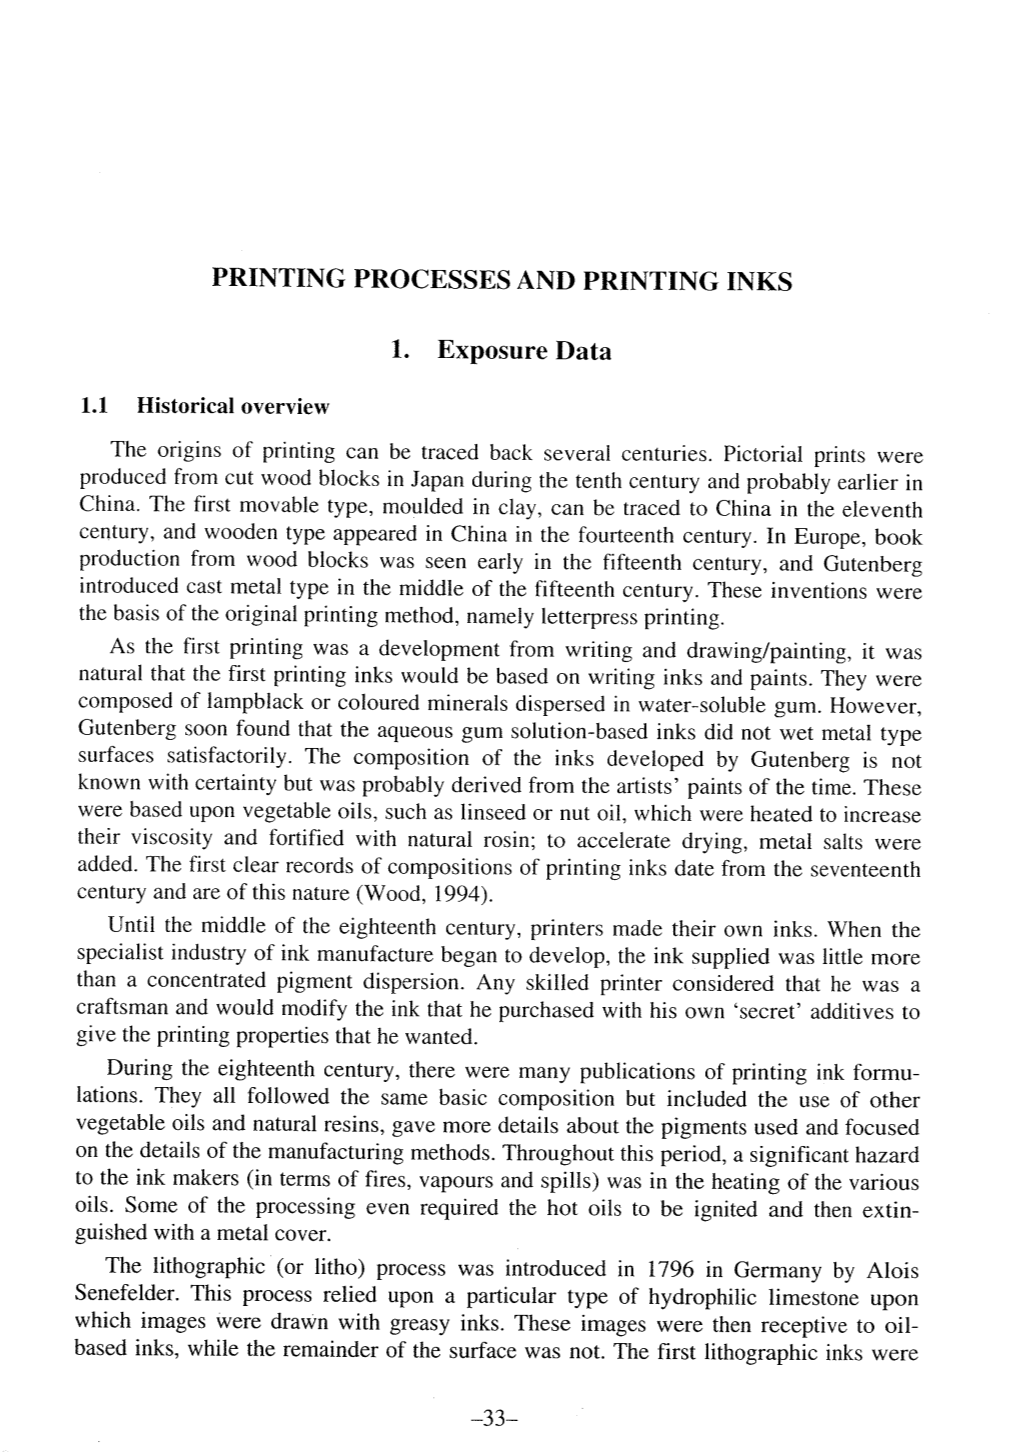 Printing Processes and Printing Inks